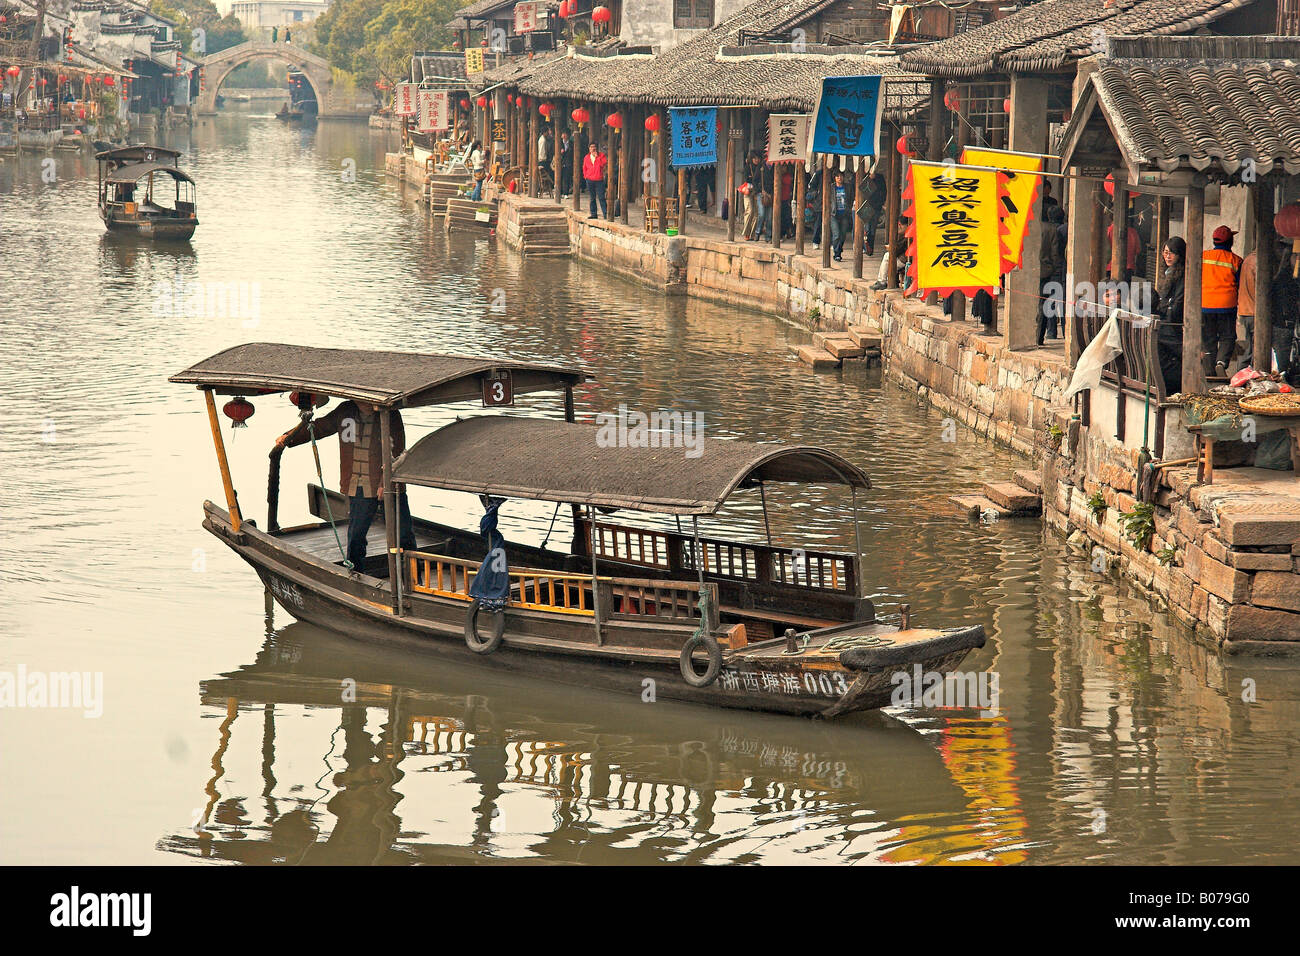 Boats On The Canal At Xitang China Stock Photo